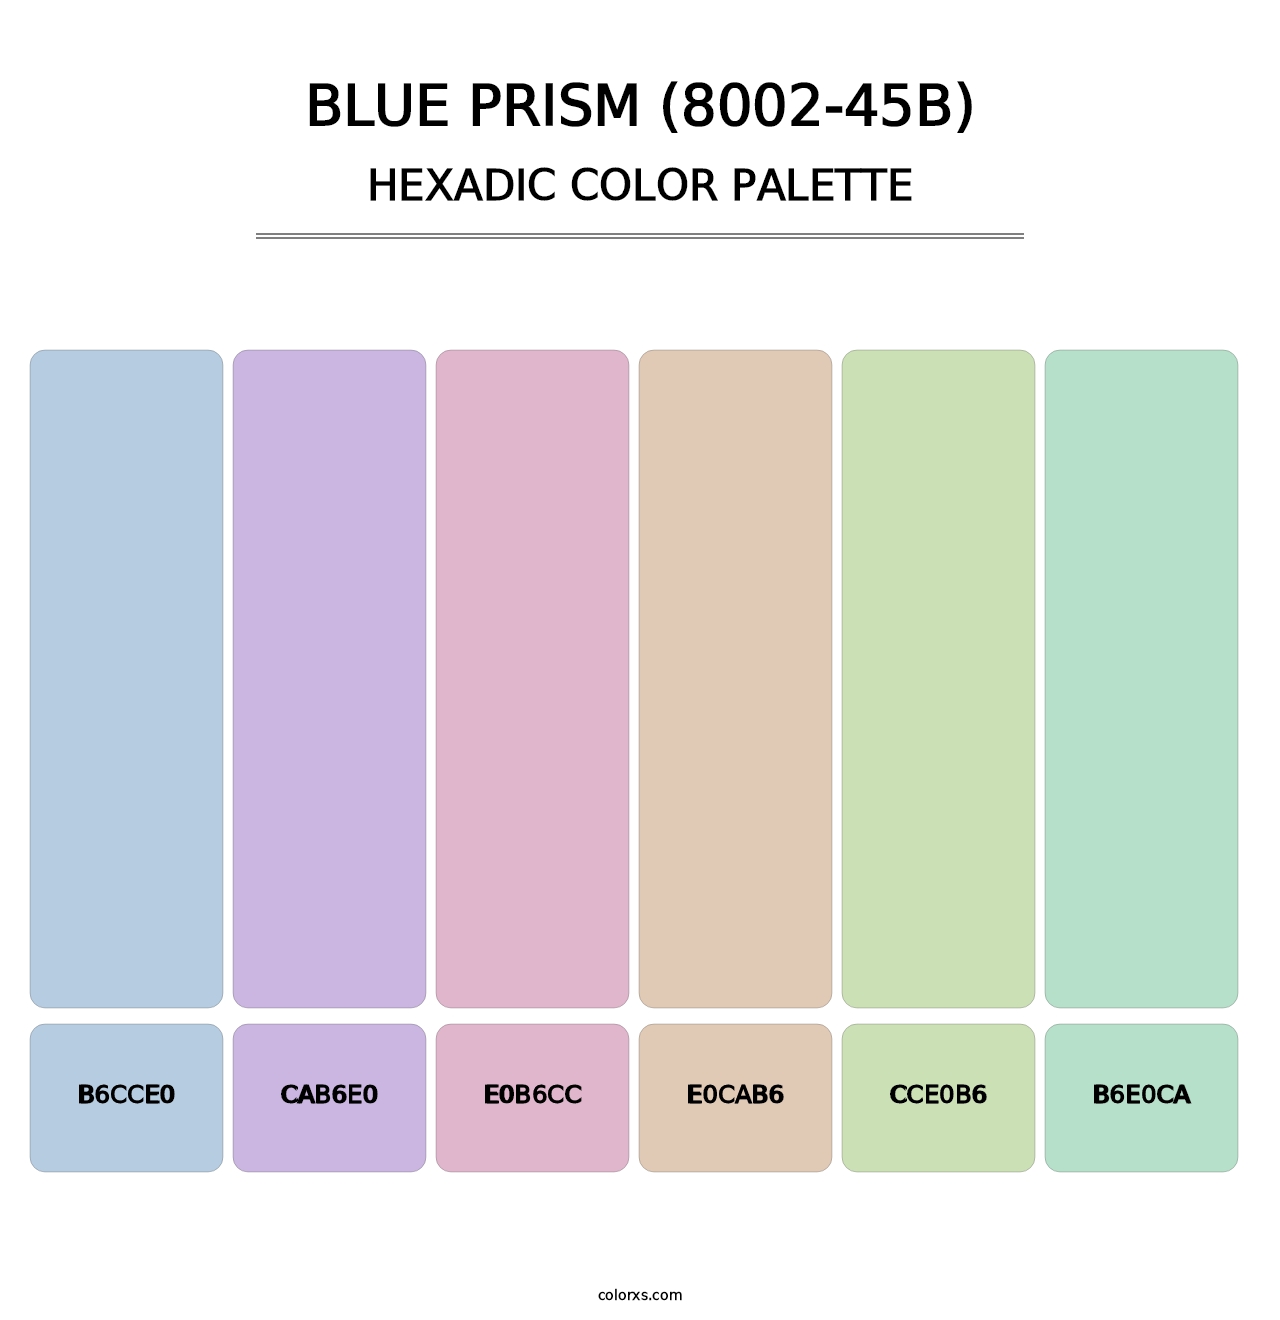 Blue Prism (8002-45B) - Hexadic Color Palette